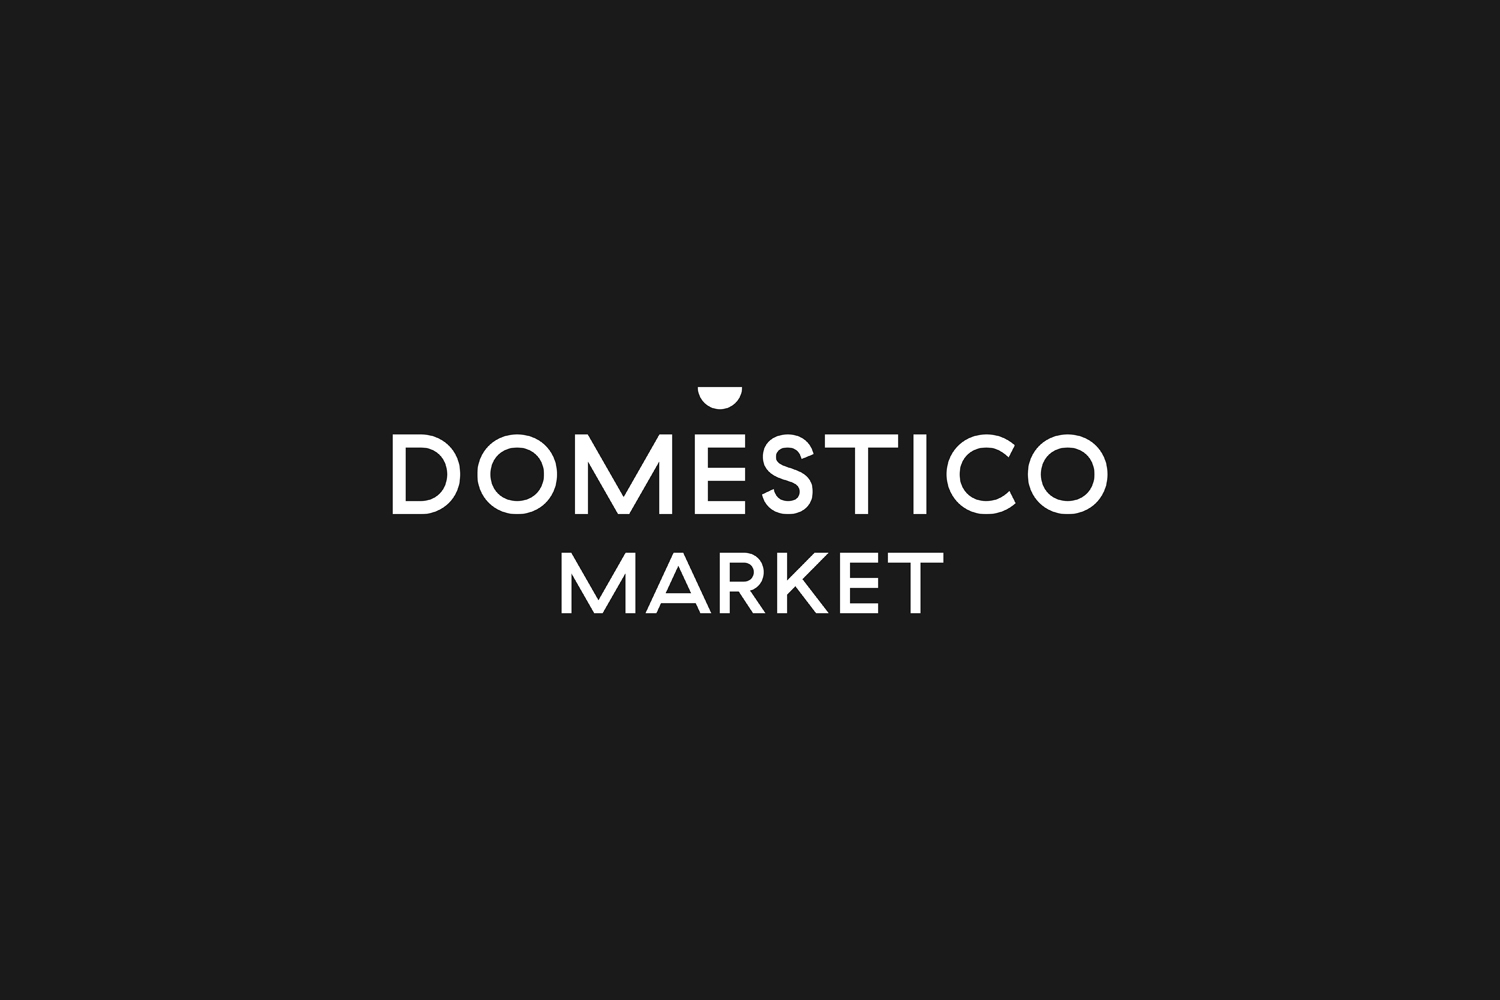 Logotype by Mucho for Spanish furniture retailer DomésticoShop's concept store DomésticoMarket